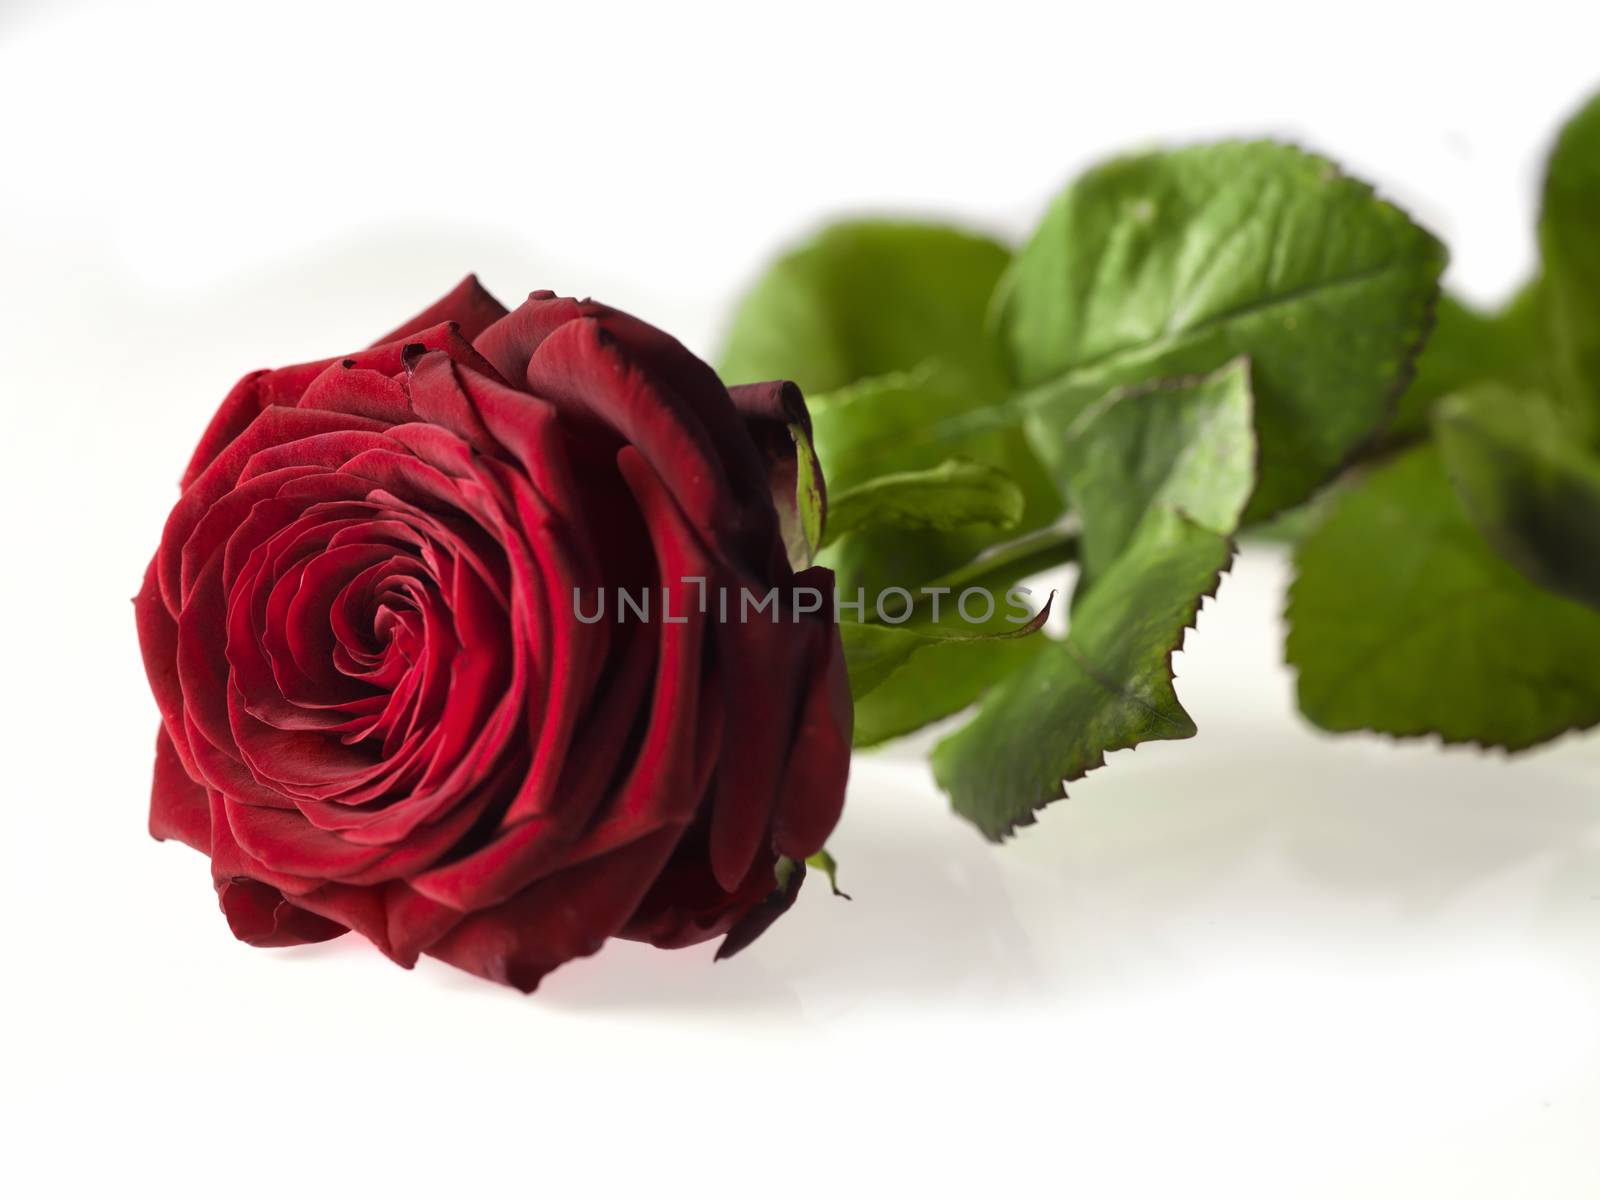 Single Valentine's day rose isolated on white background by janssenkruseproductions